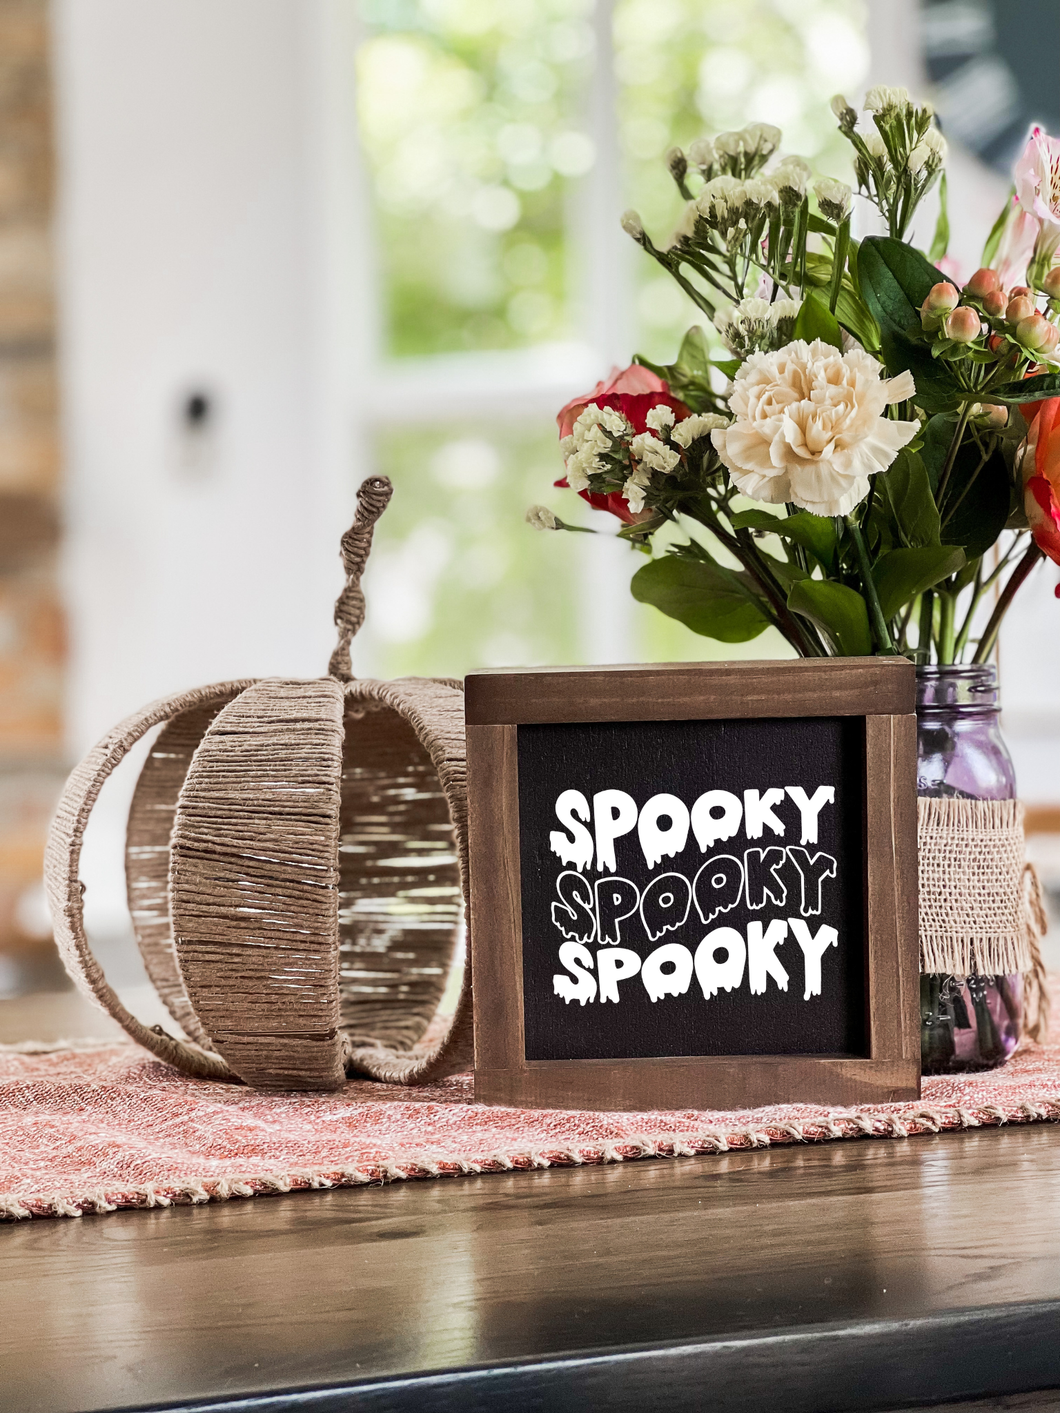 Spooky Halloween Wood Sign | Halloween Decor